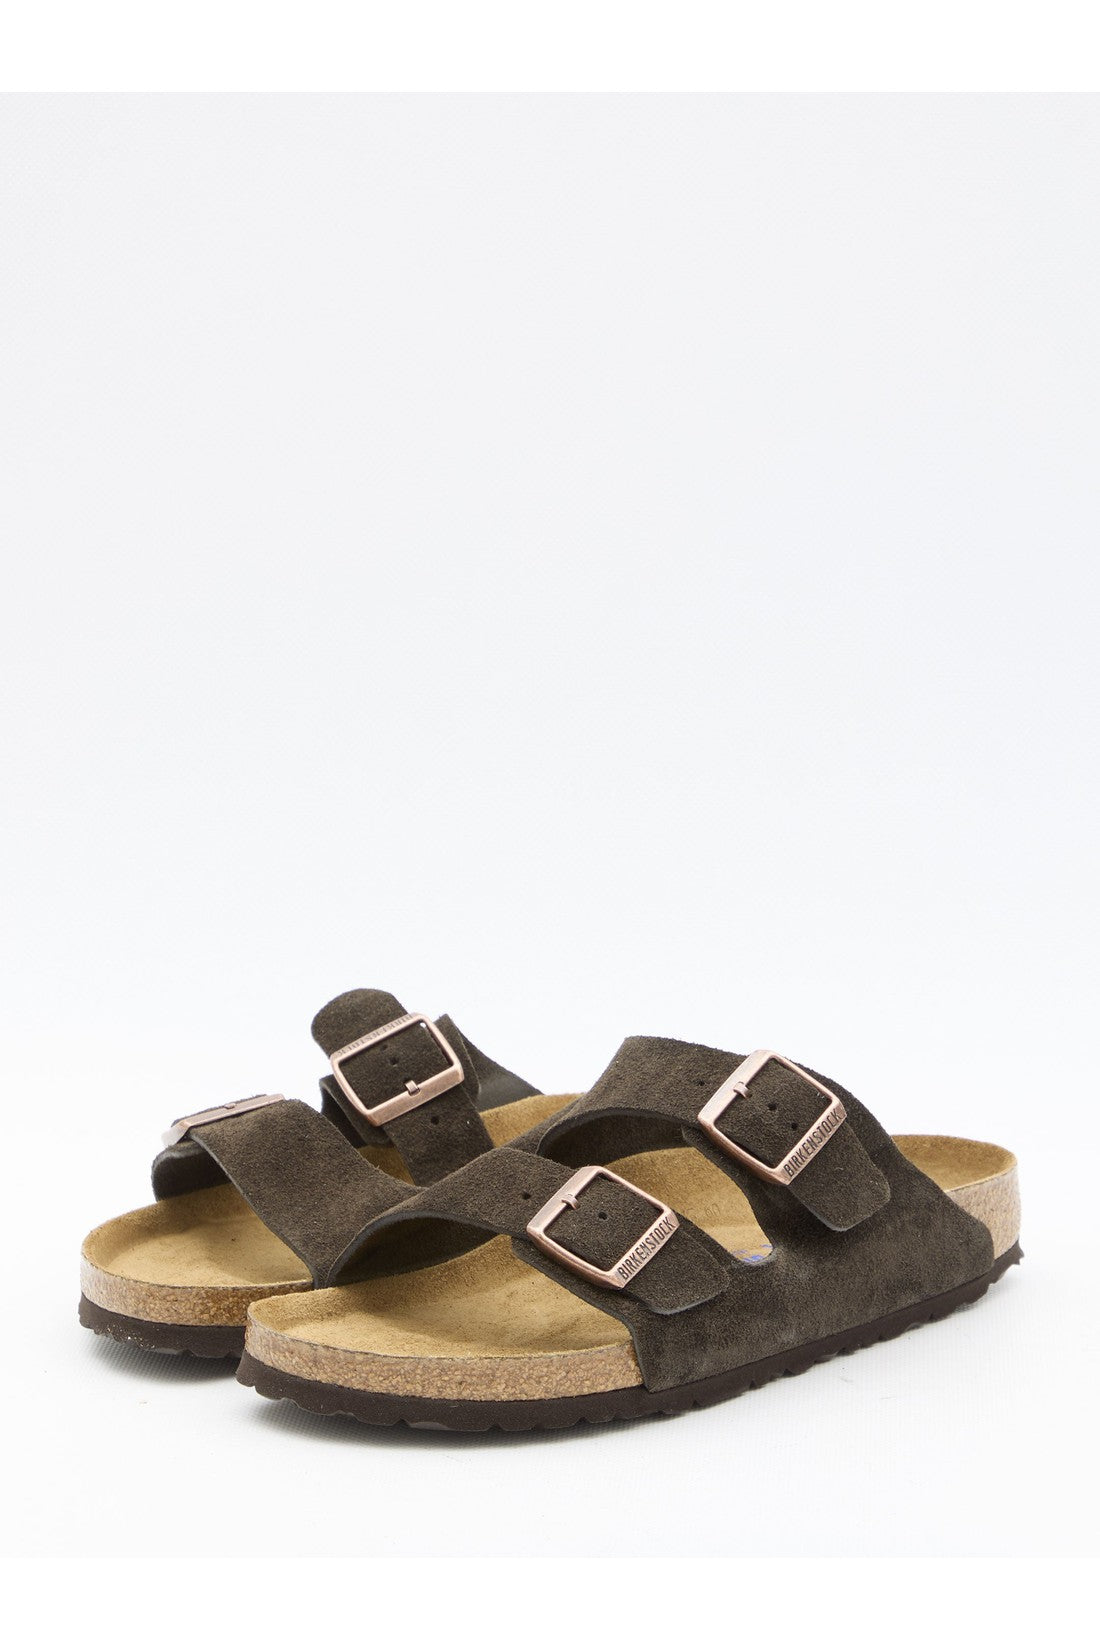 Arizona BS sandals